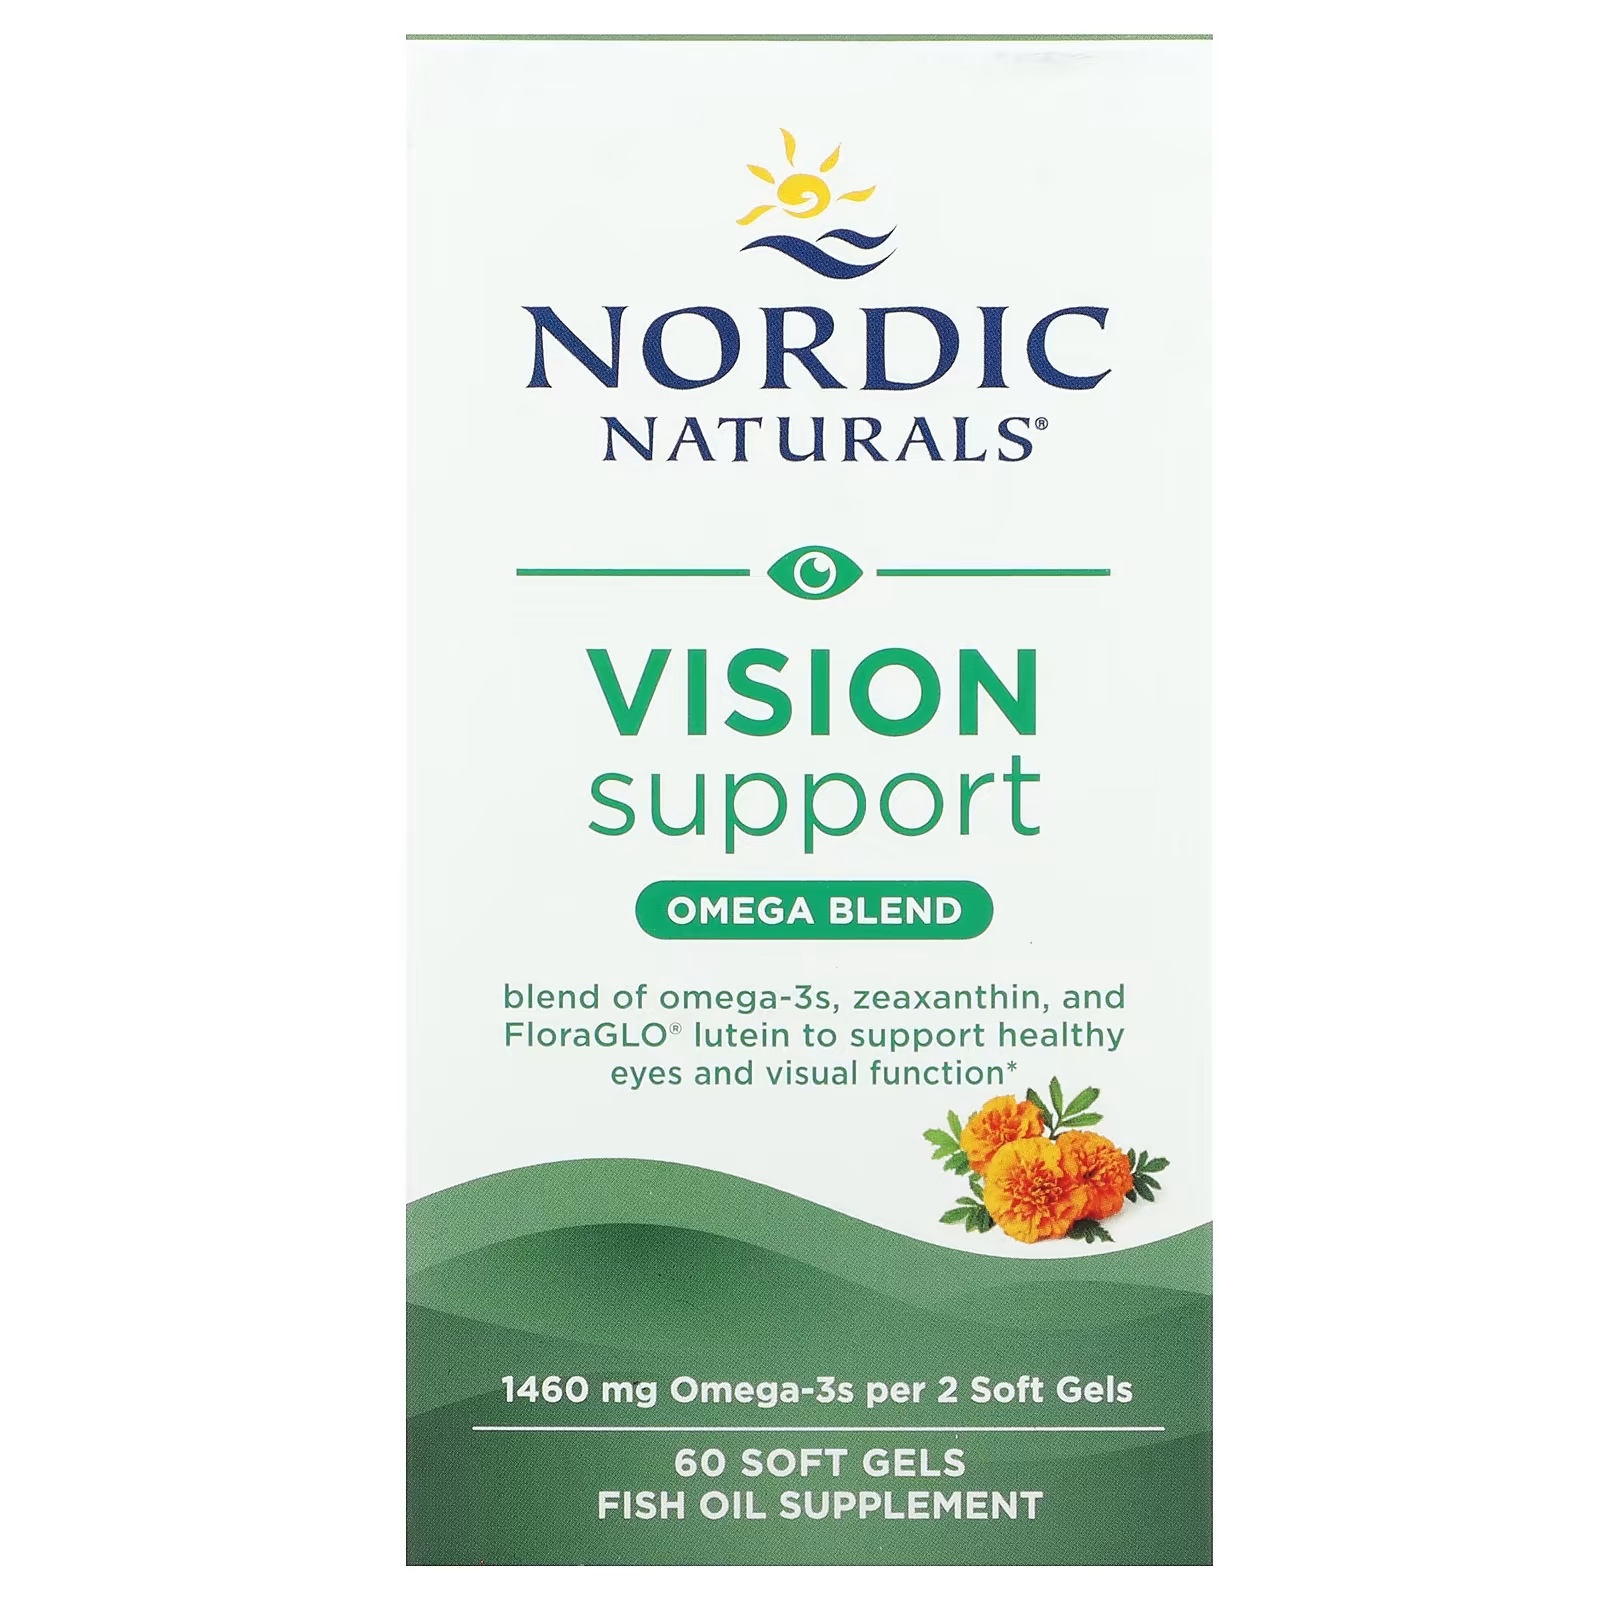 Nordic Naturals Vision Support Omega Blend 1460 мг, 60 мягких таблеток (730 мг на мягкую гель) nordic naturals vision support omega blend 1460 мг 60 мягких таблеток 730 мг на мягкую гель